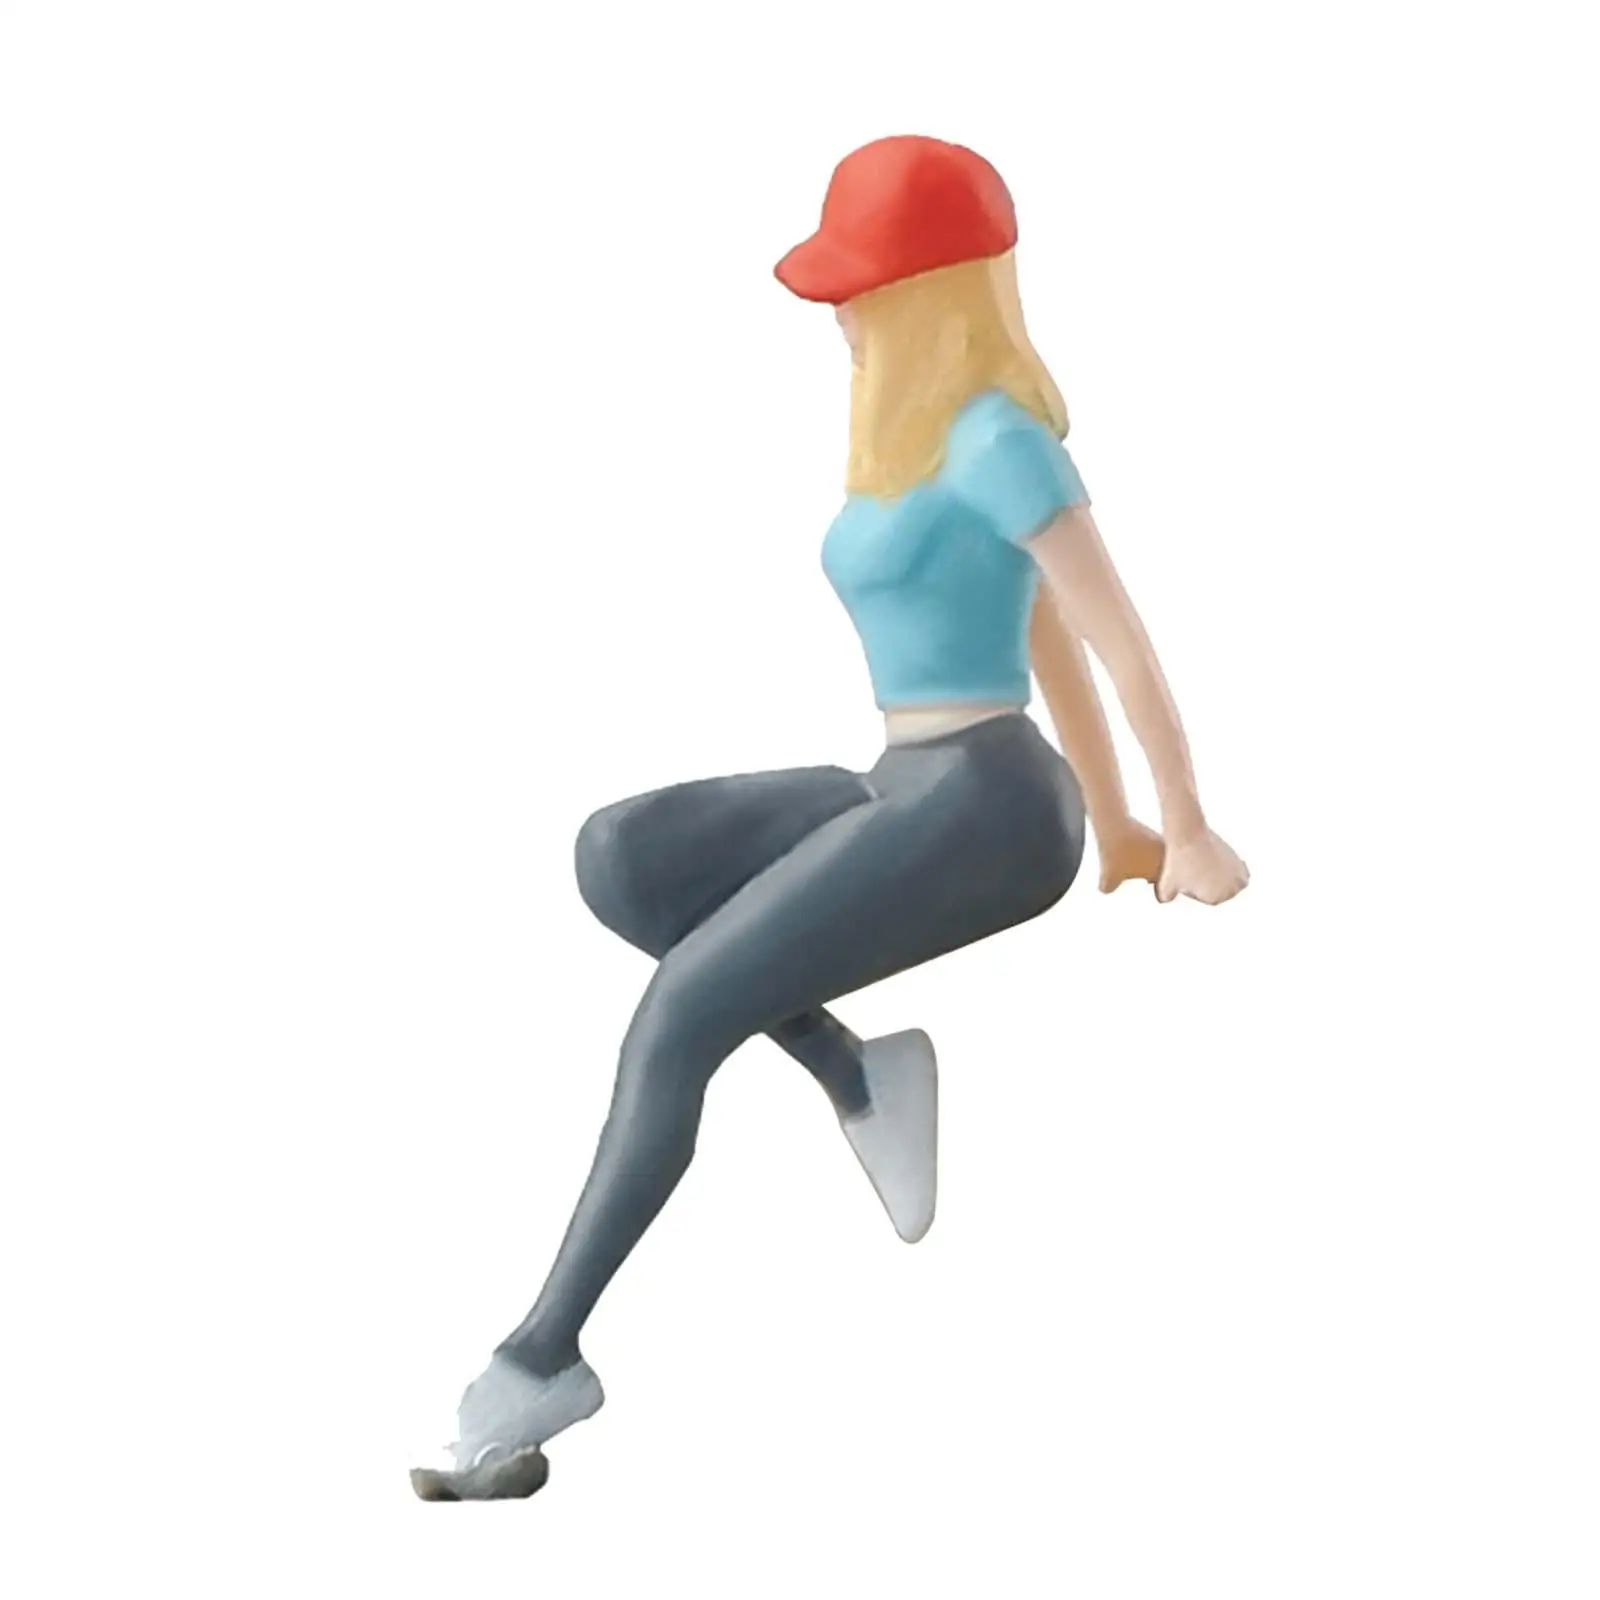 Miniature Scene People Role Play Figure Simulation Miniature toy:64 Girl Figure for Model Train Layout Miniature Scene Diorama